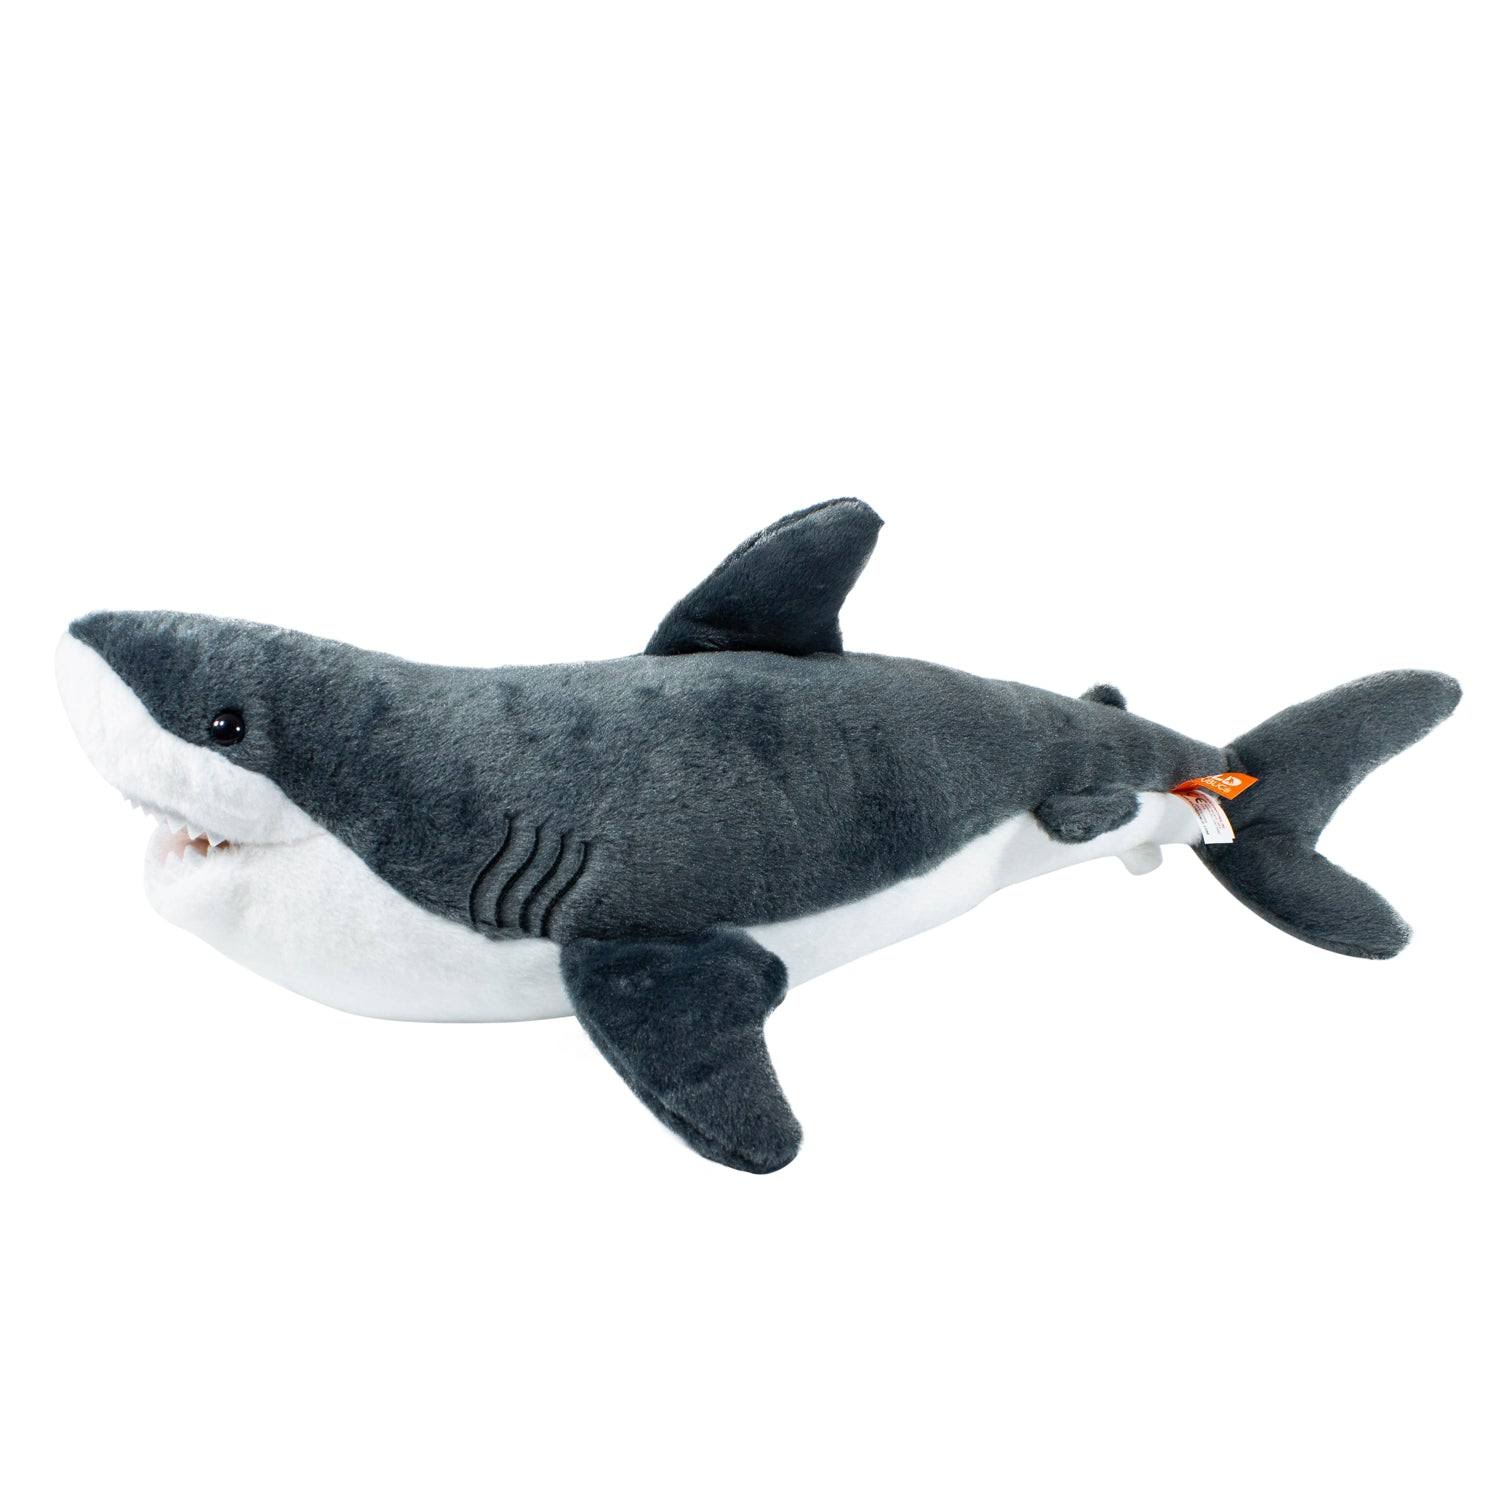 Wild Republic Cuddlekins Great Shark Cuddly Plush Toy - 54cm, White and Gray